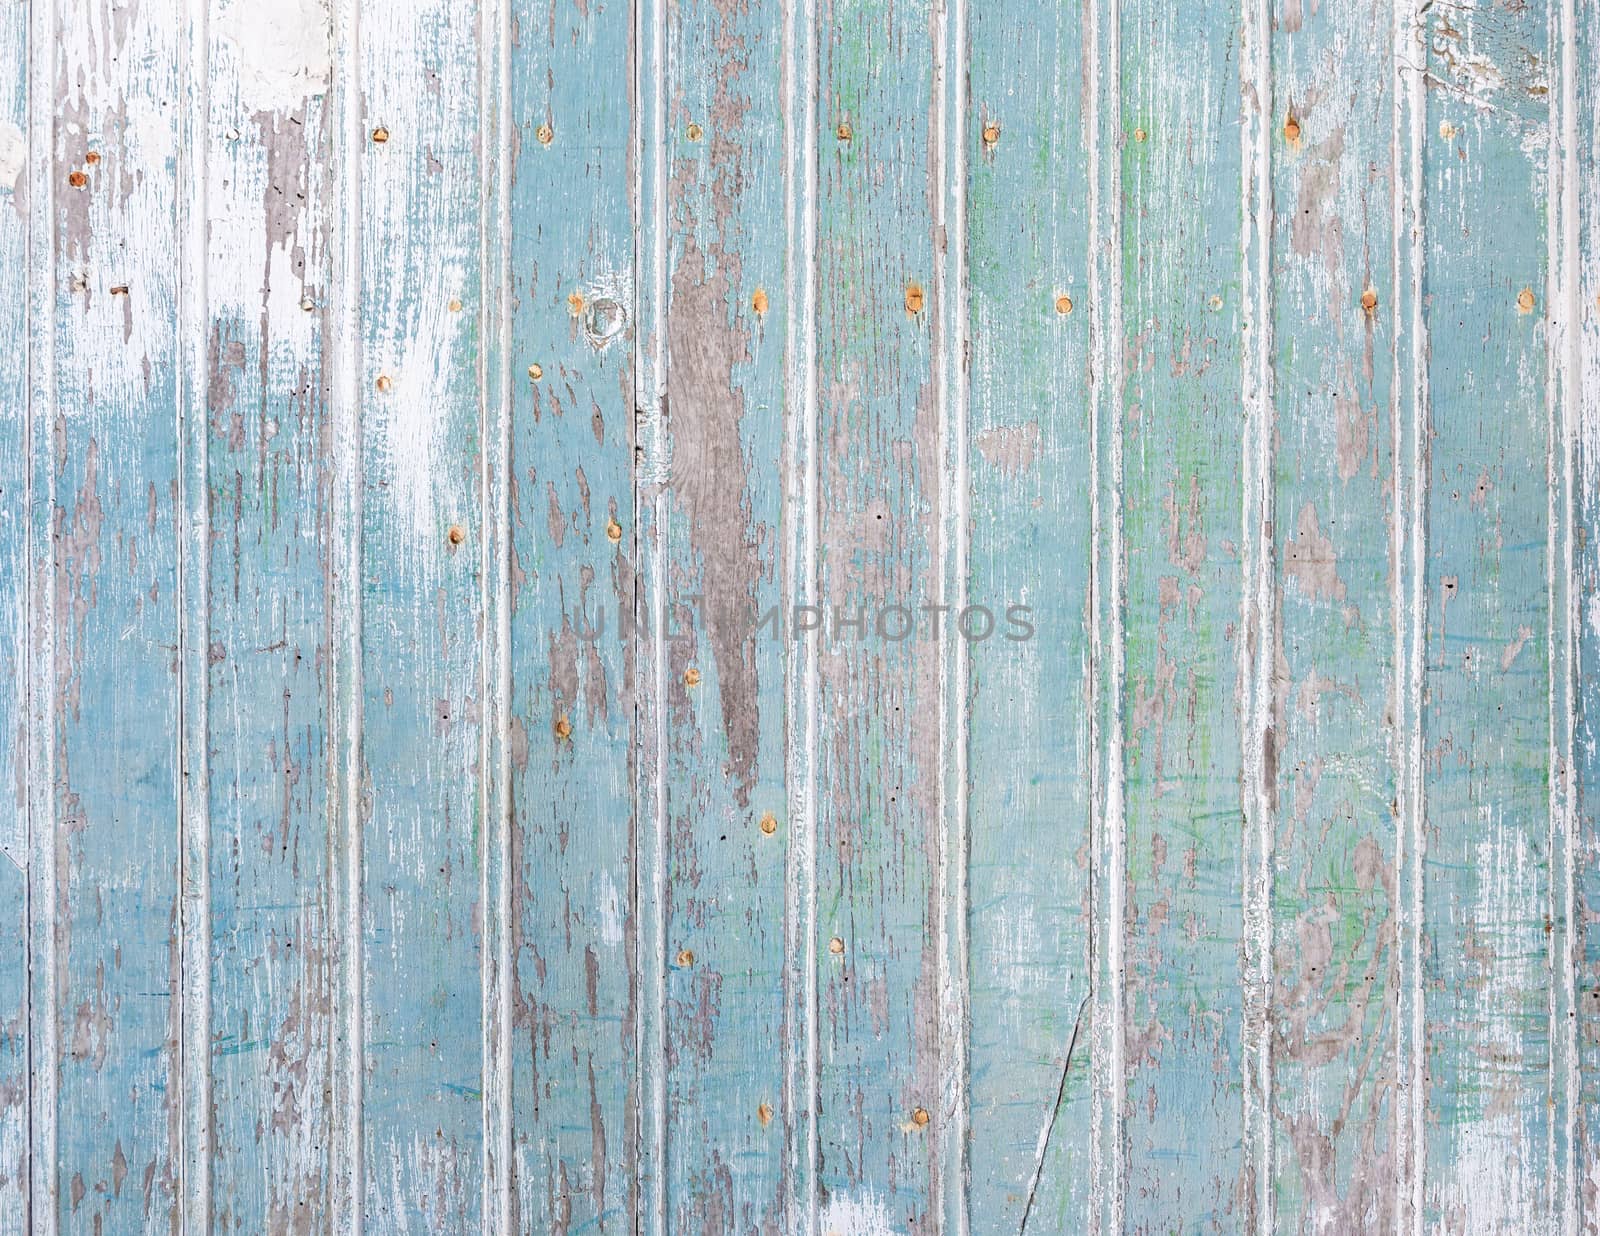 Closeup shot of an old blue wooden door texture. Wood background.